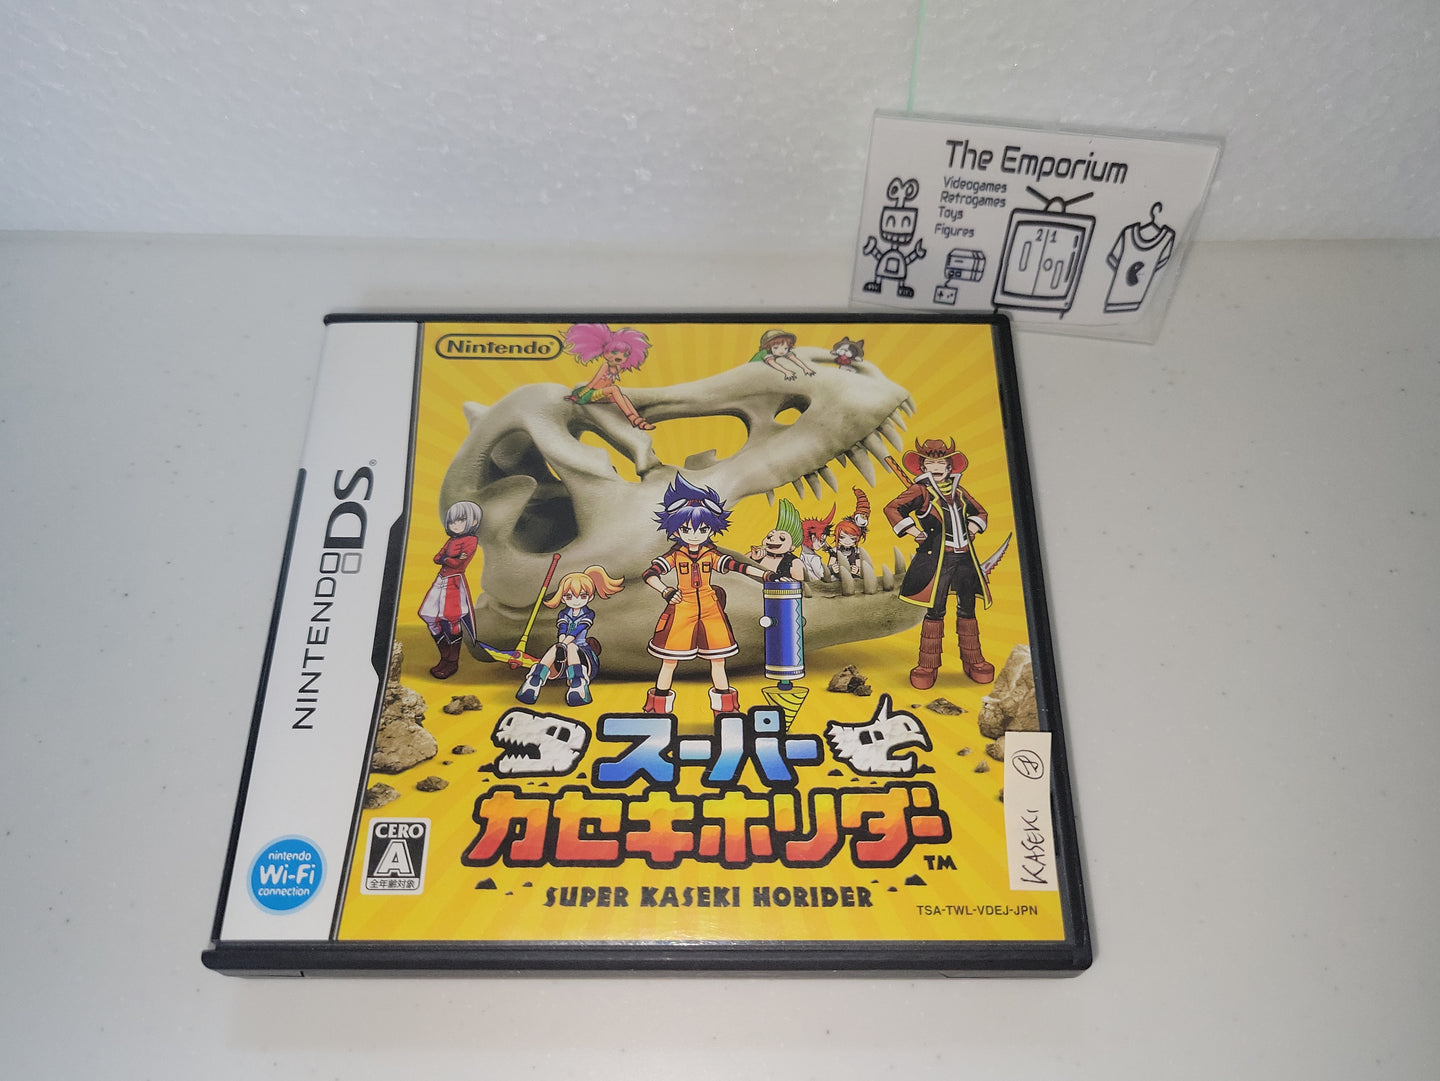 Super Kasekihorida - Nintendo Ds NDS